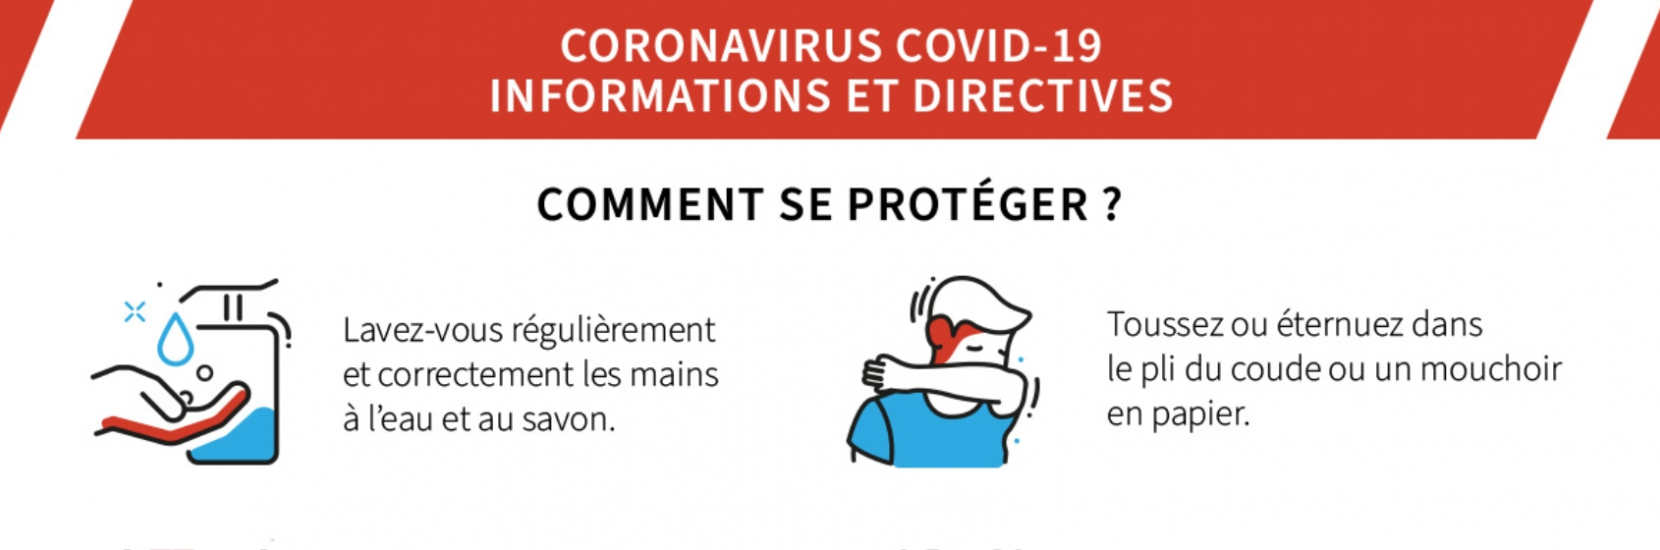 Coronavirus: COVID-19